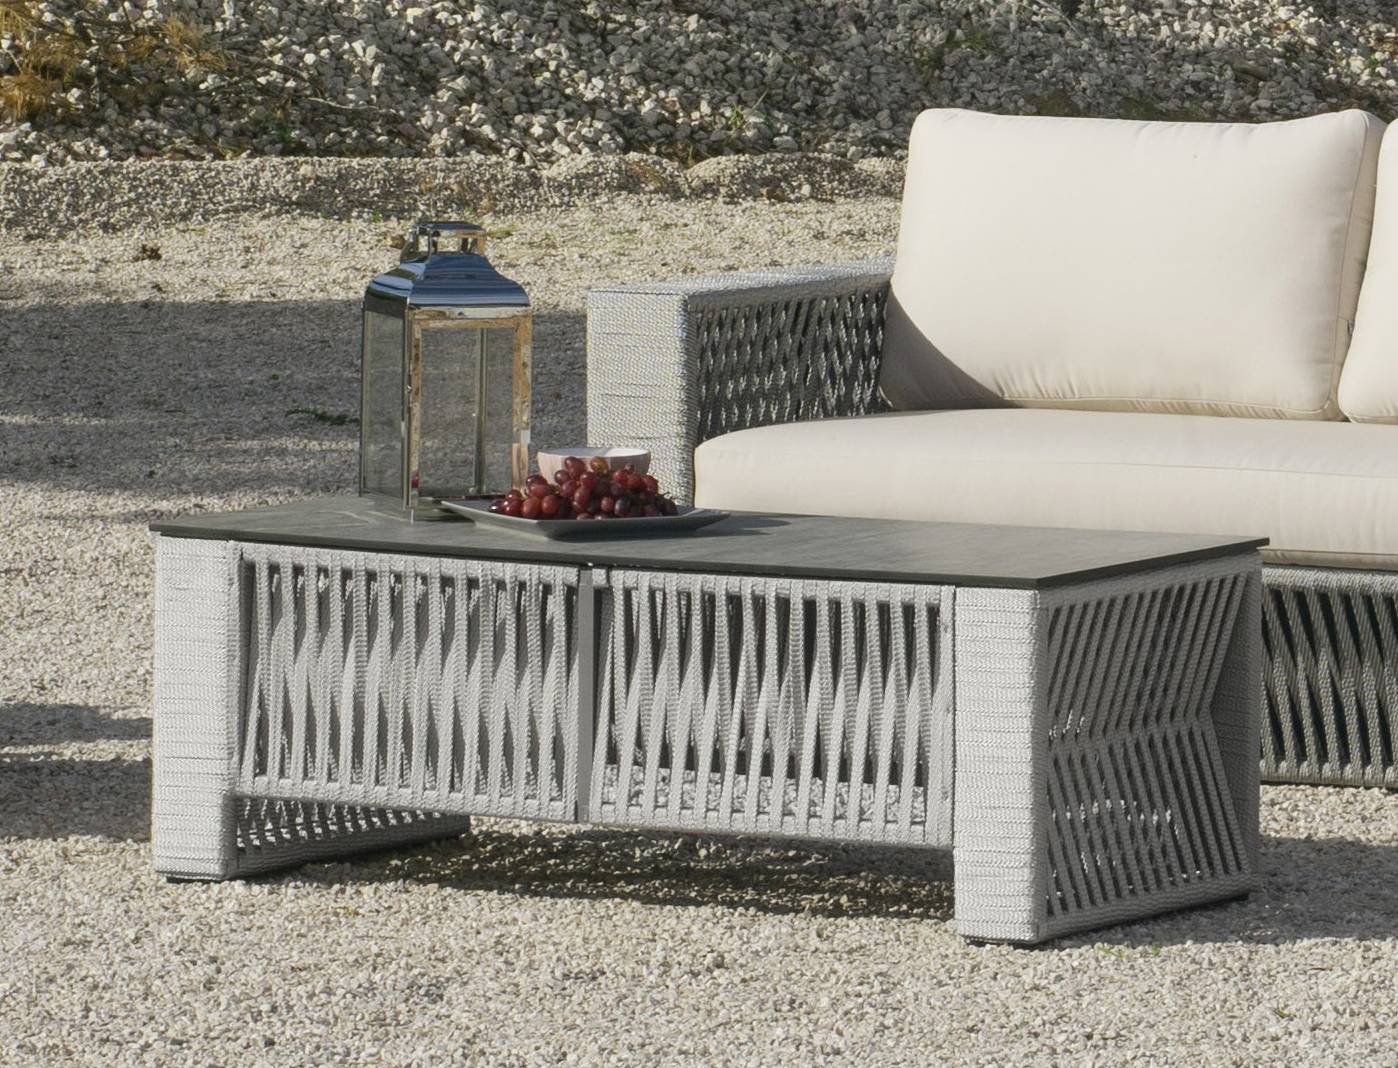 Set Aluminio Prusia-8 - Conjunto aluminio-cuerda: 1 sofá de 3 plazas + 2 sillones + 1 mesa de centro. Disponible en color blanco, gris, oro o champagne.